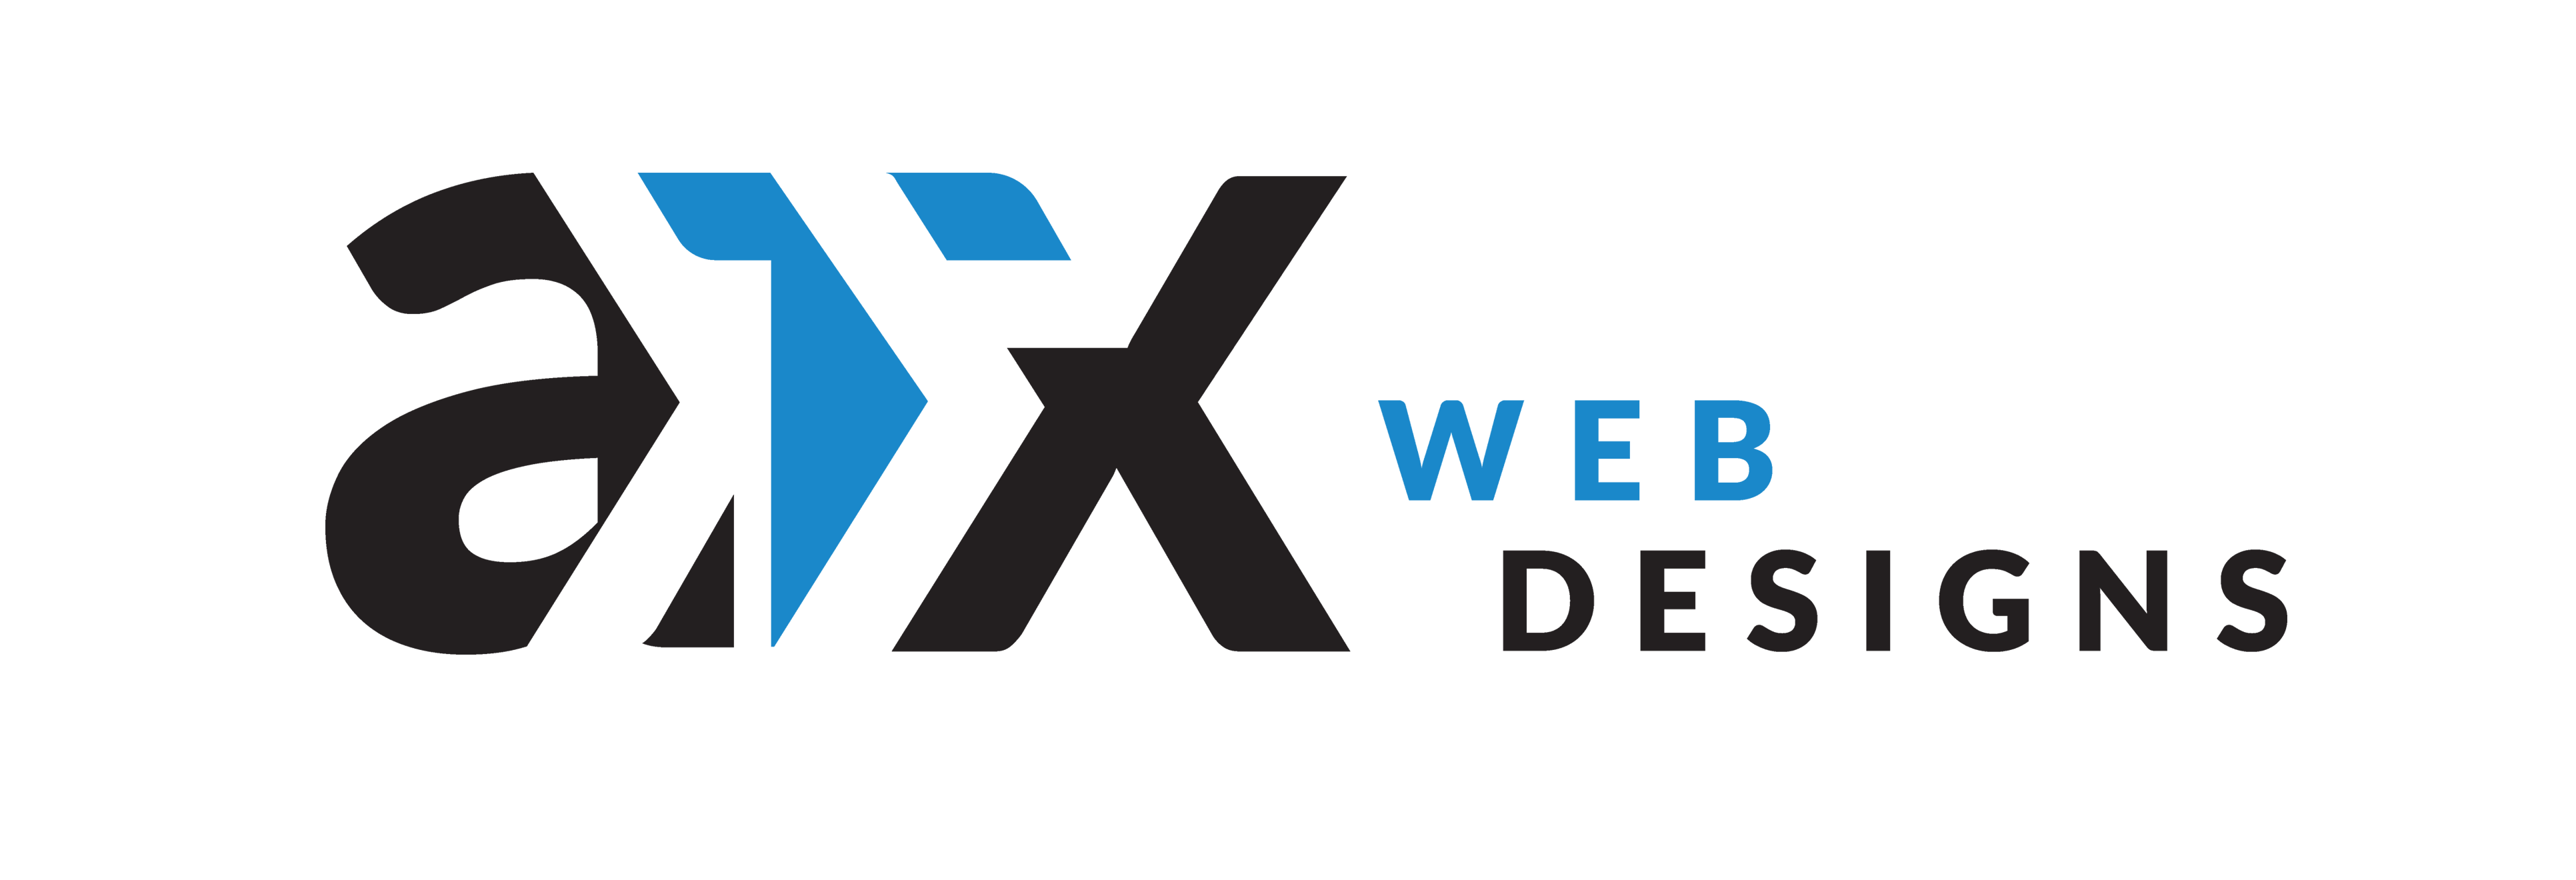 Top Web Design Agency Logo: ATX Web Designs